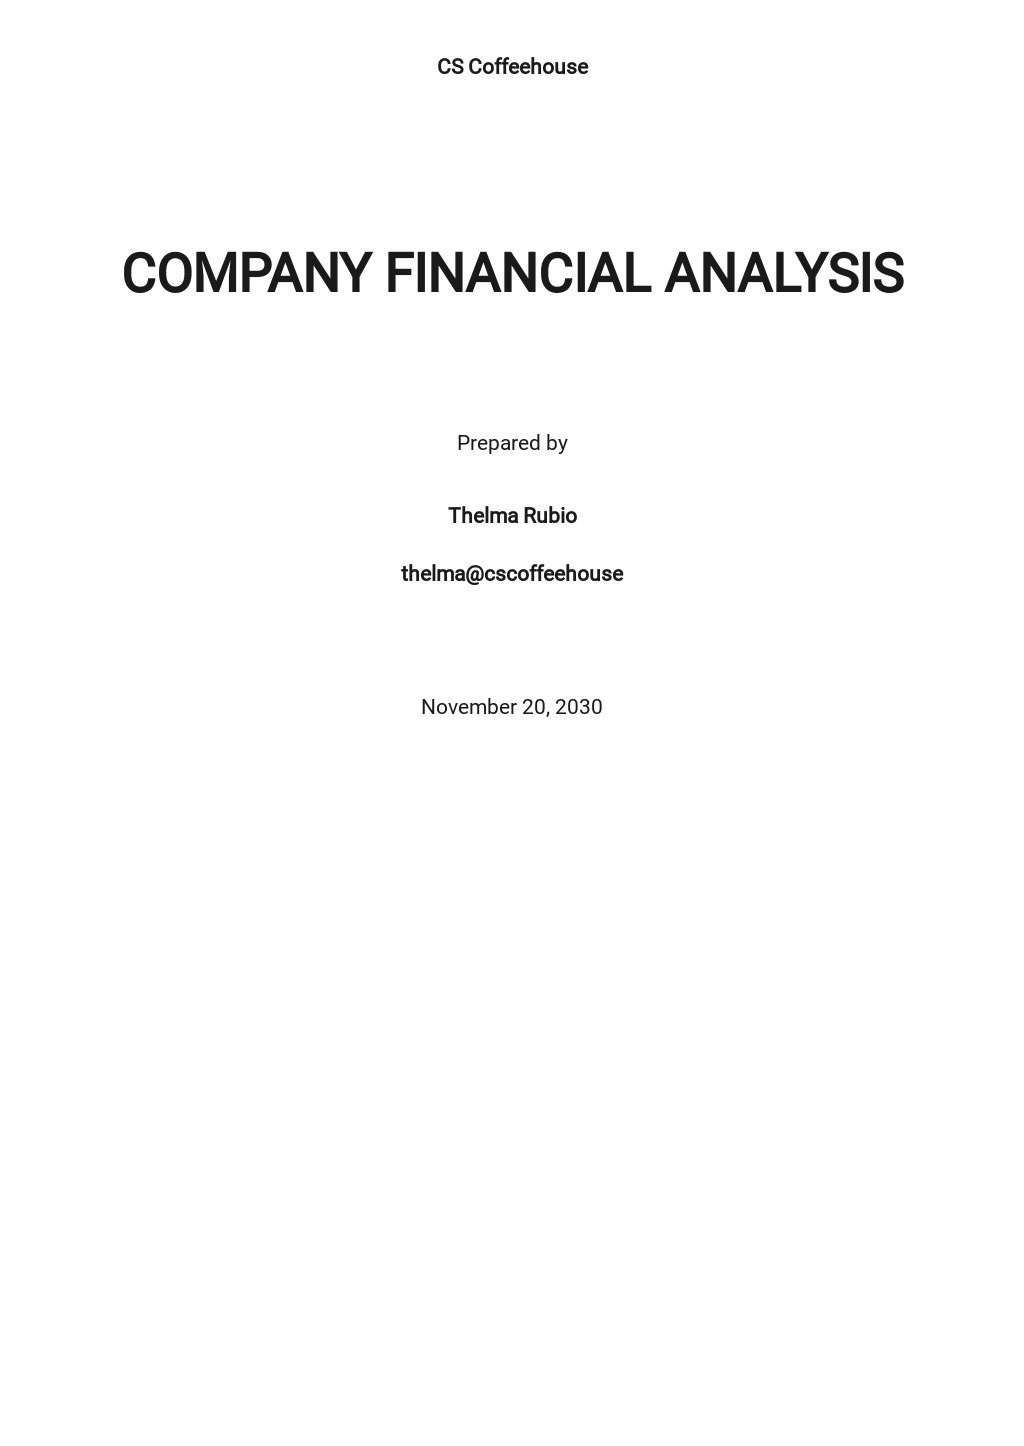 Company Financial Analysis Template.jpe